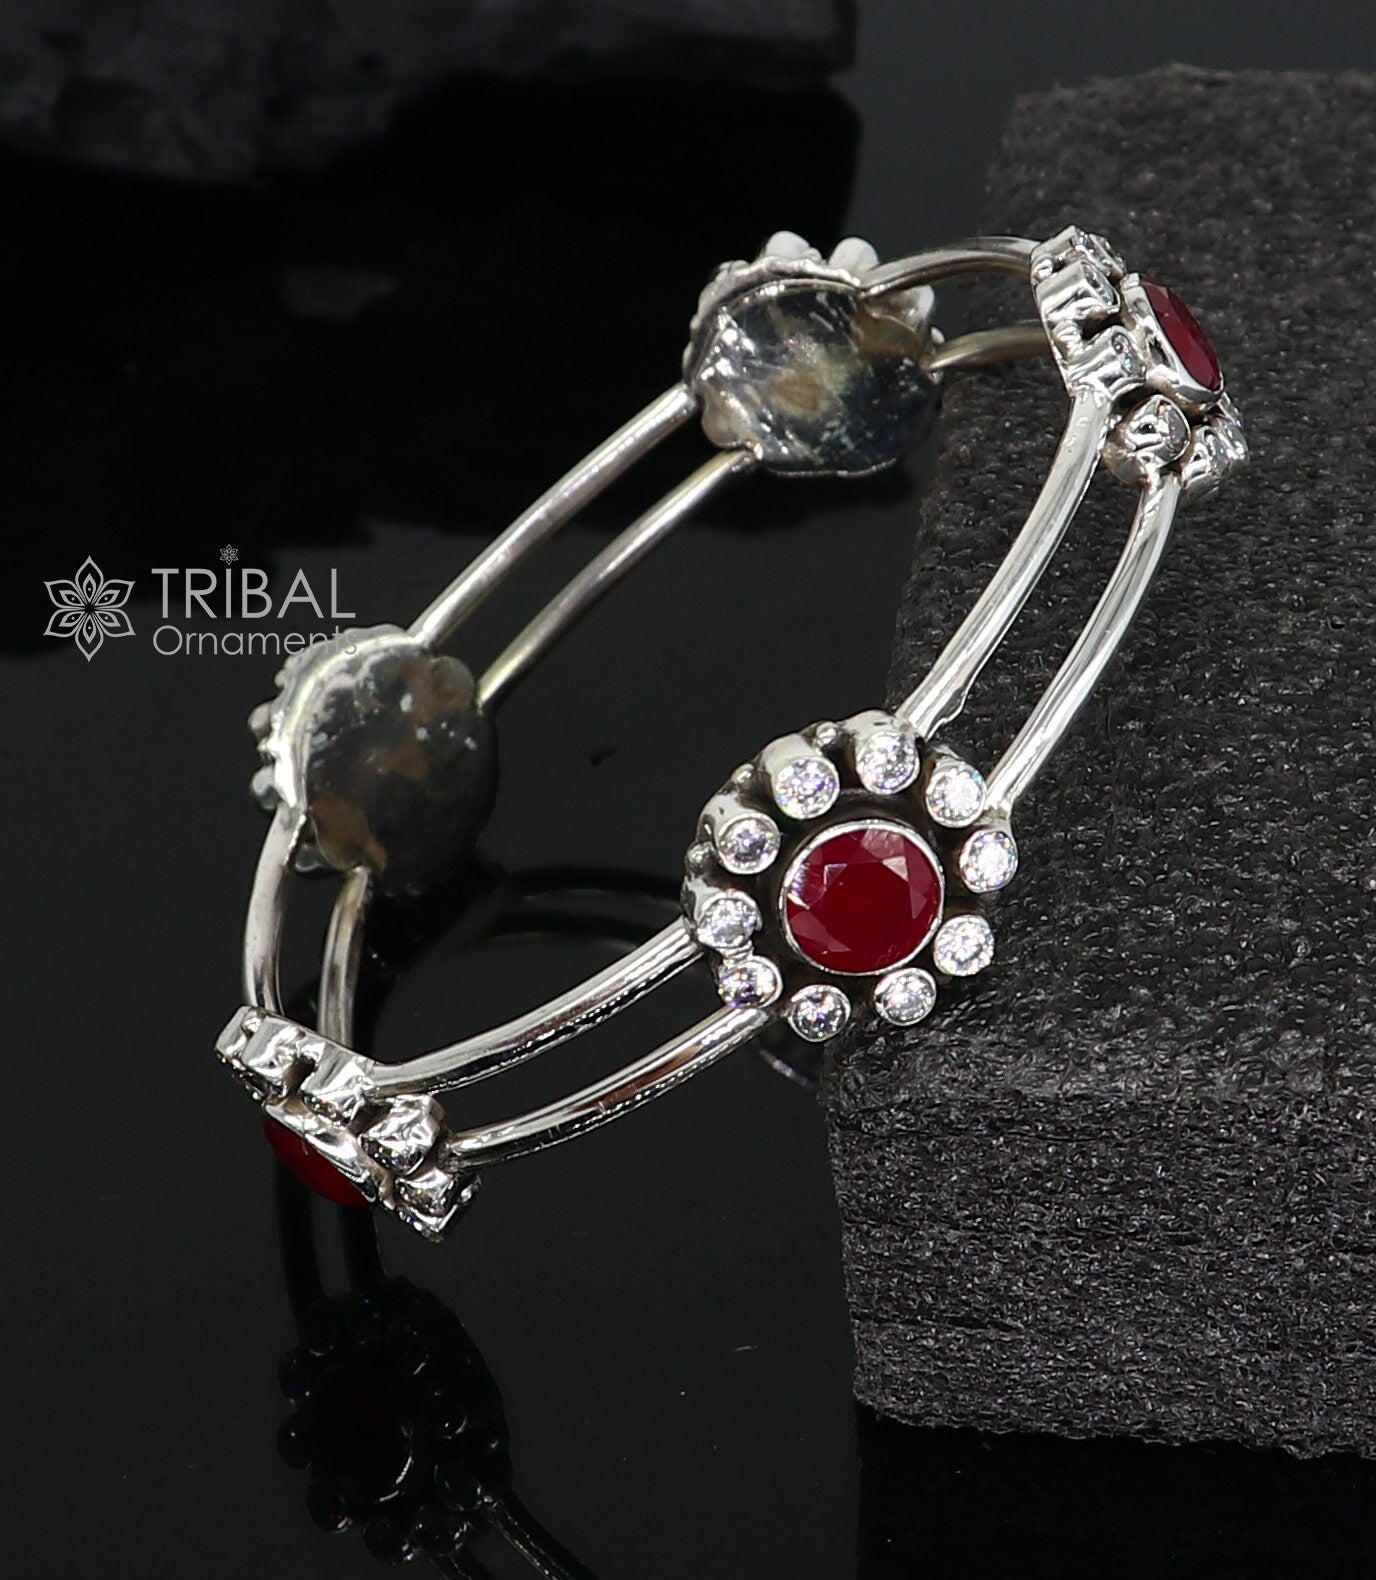 925 sterling silver handmade fabulous red cut stone bangle bracelet customized girl's women's beautiful stylish fancy jewelry nba410 - TRIBAL ORNAMENTS